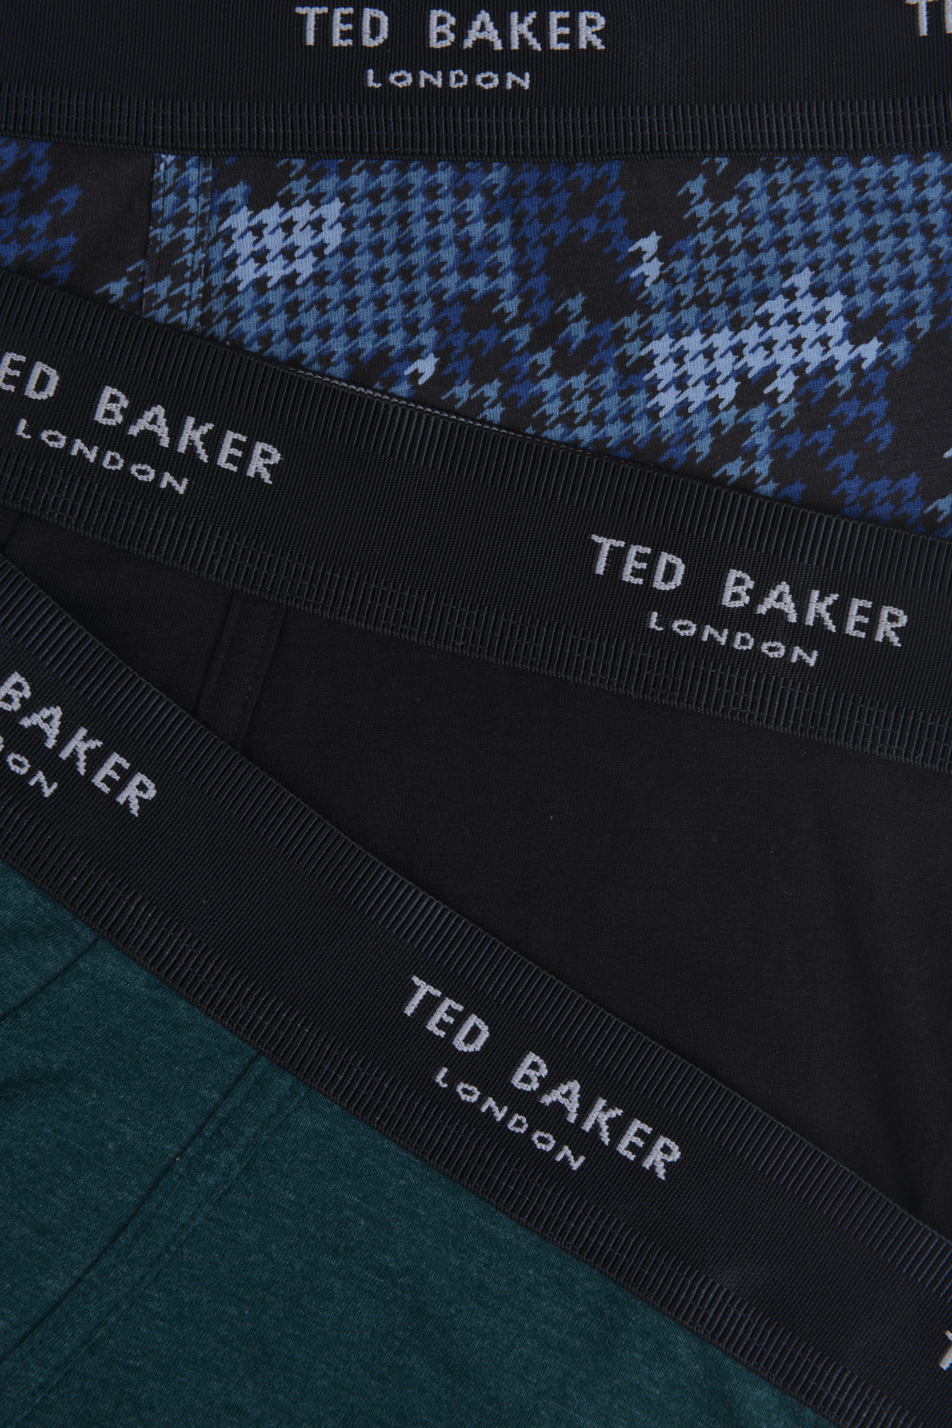 Ted Baker 3 Pack Men's Cotton Trunk